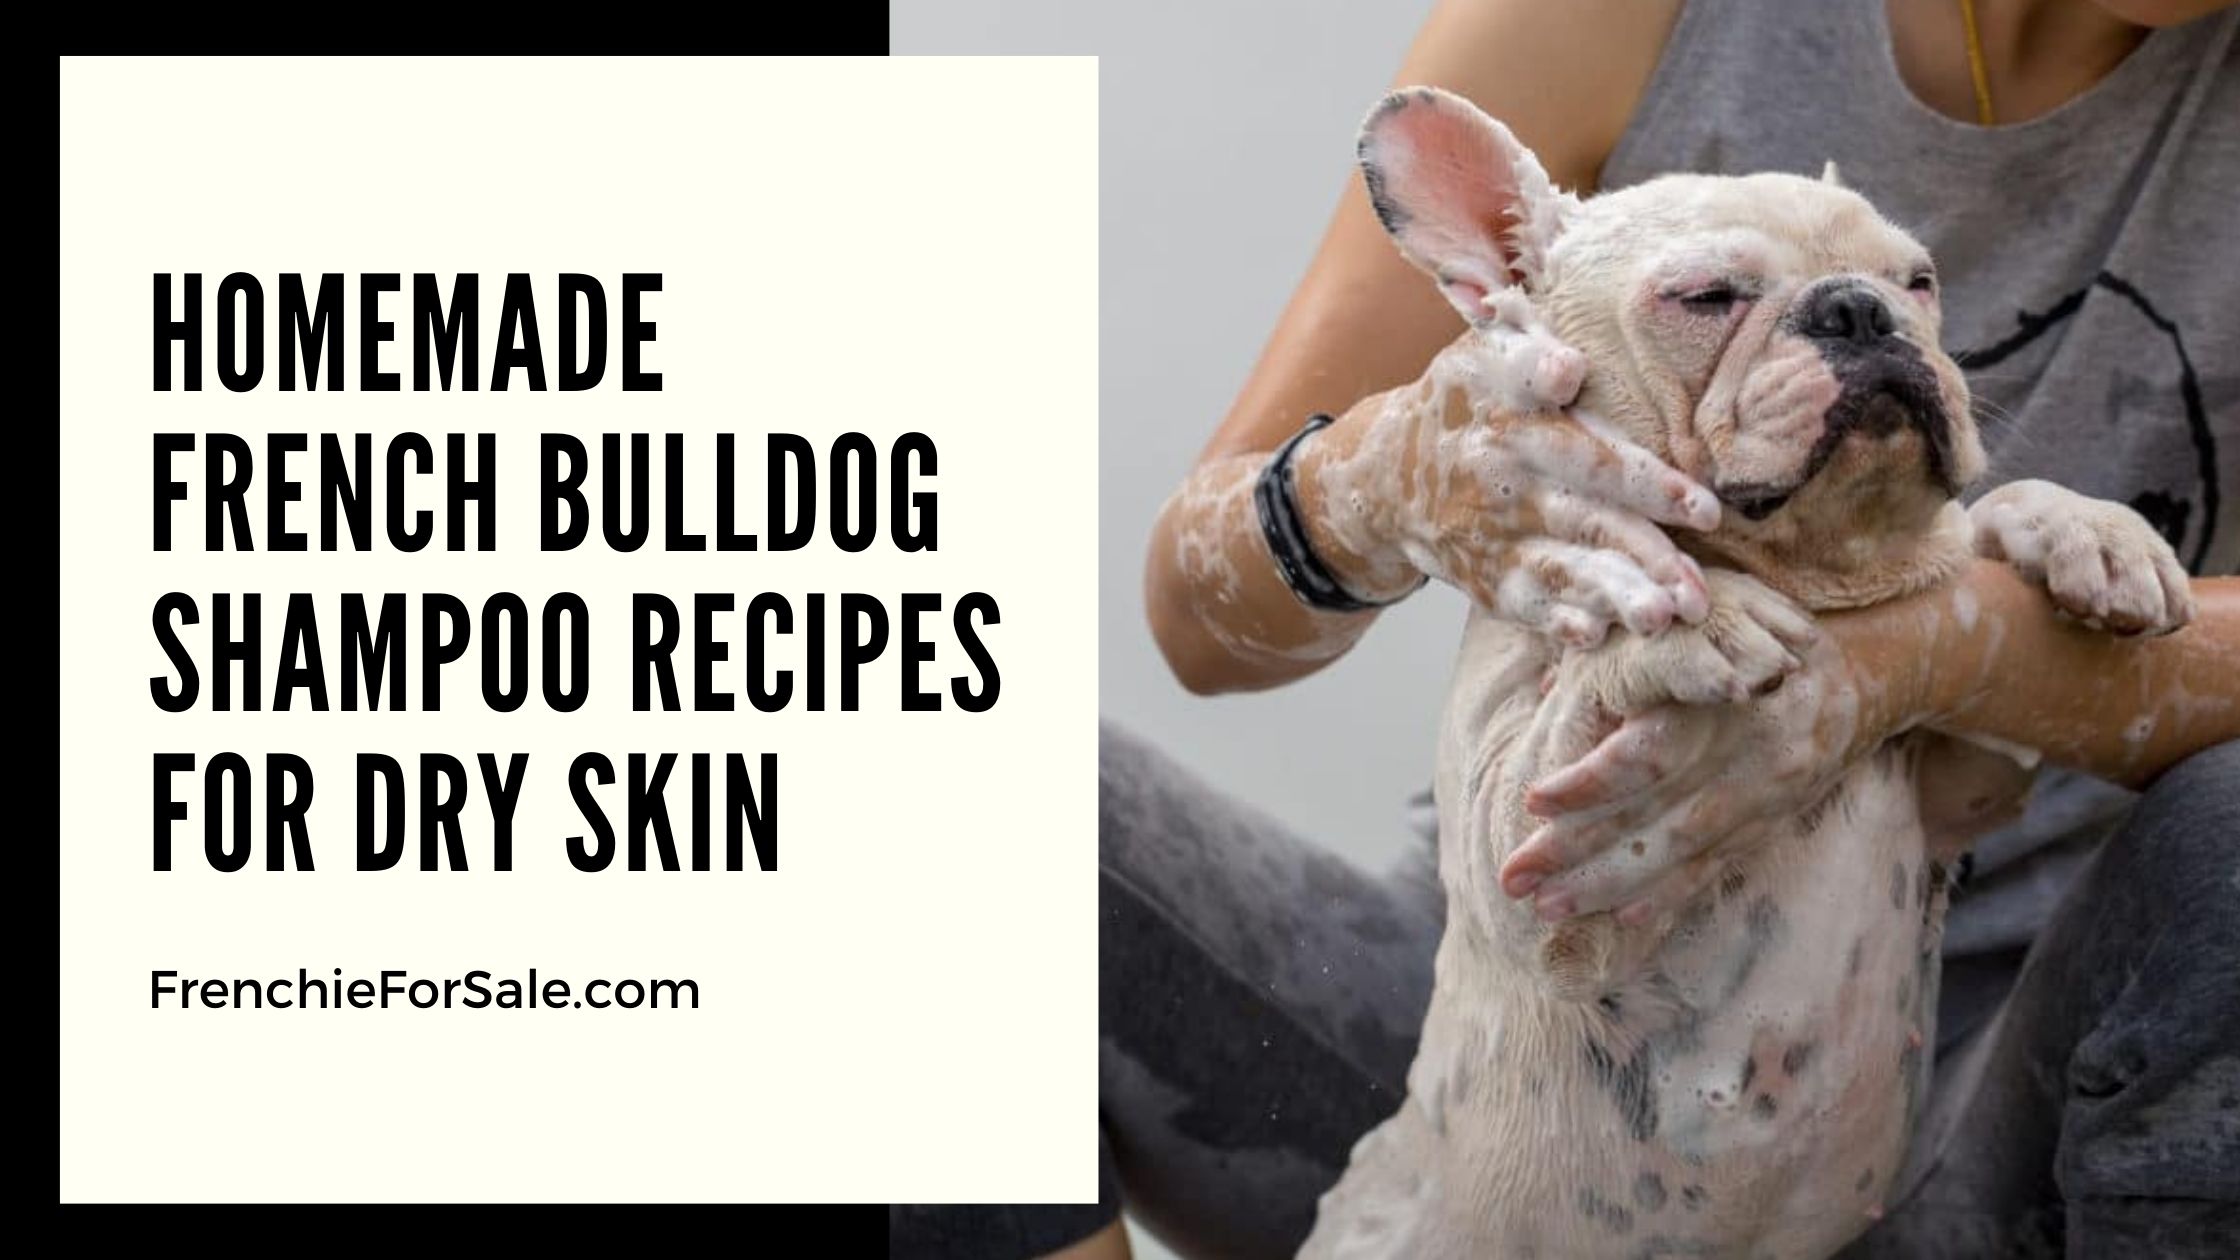 Homemade French Bulldog Shampoo Recipes for Dry Skin